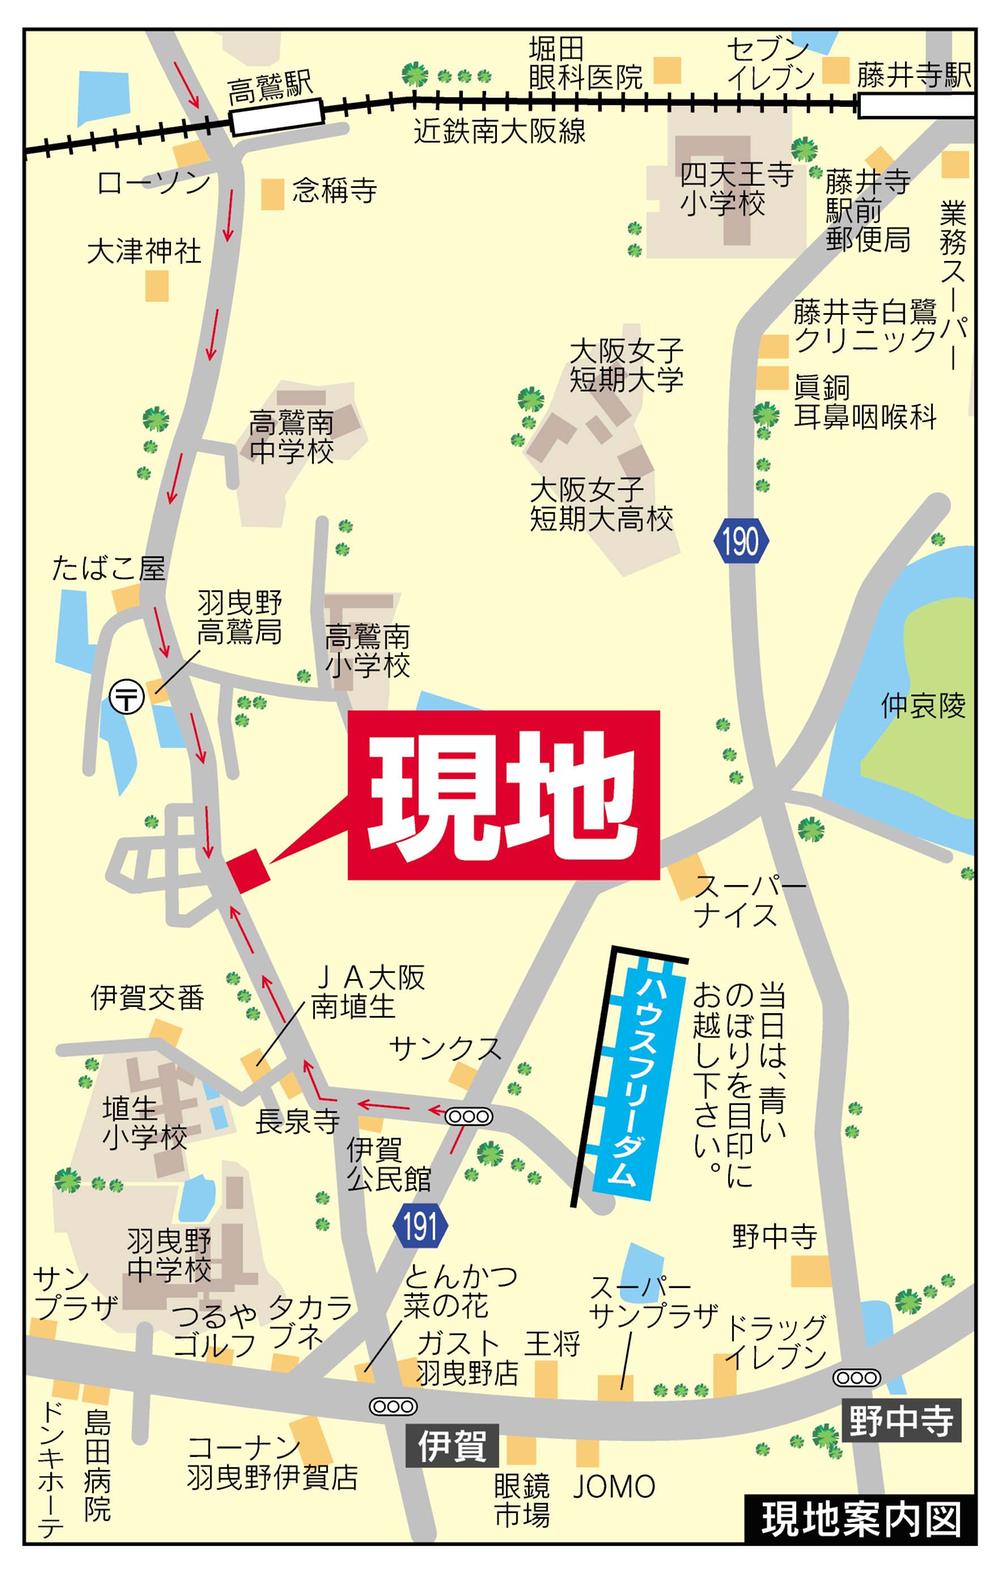 Local guide map. Kintetsu Takasu a 10-minute walk from the train station